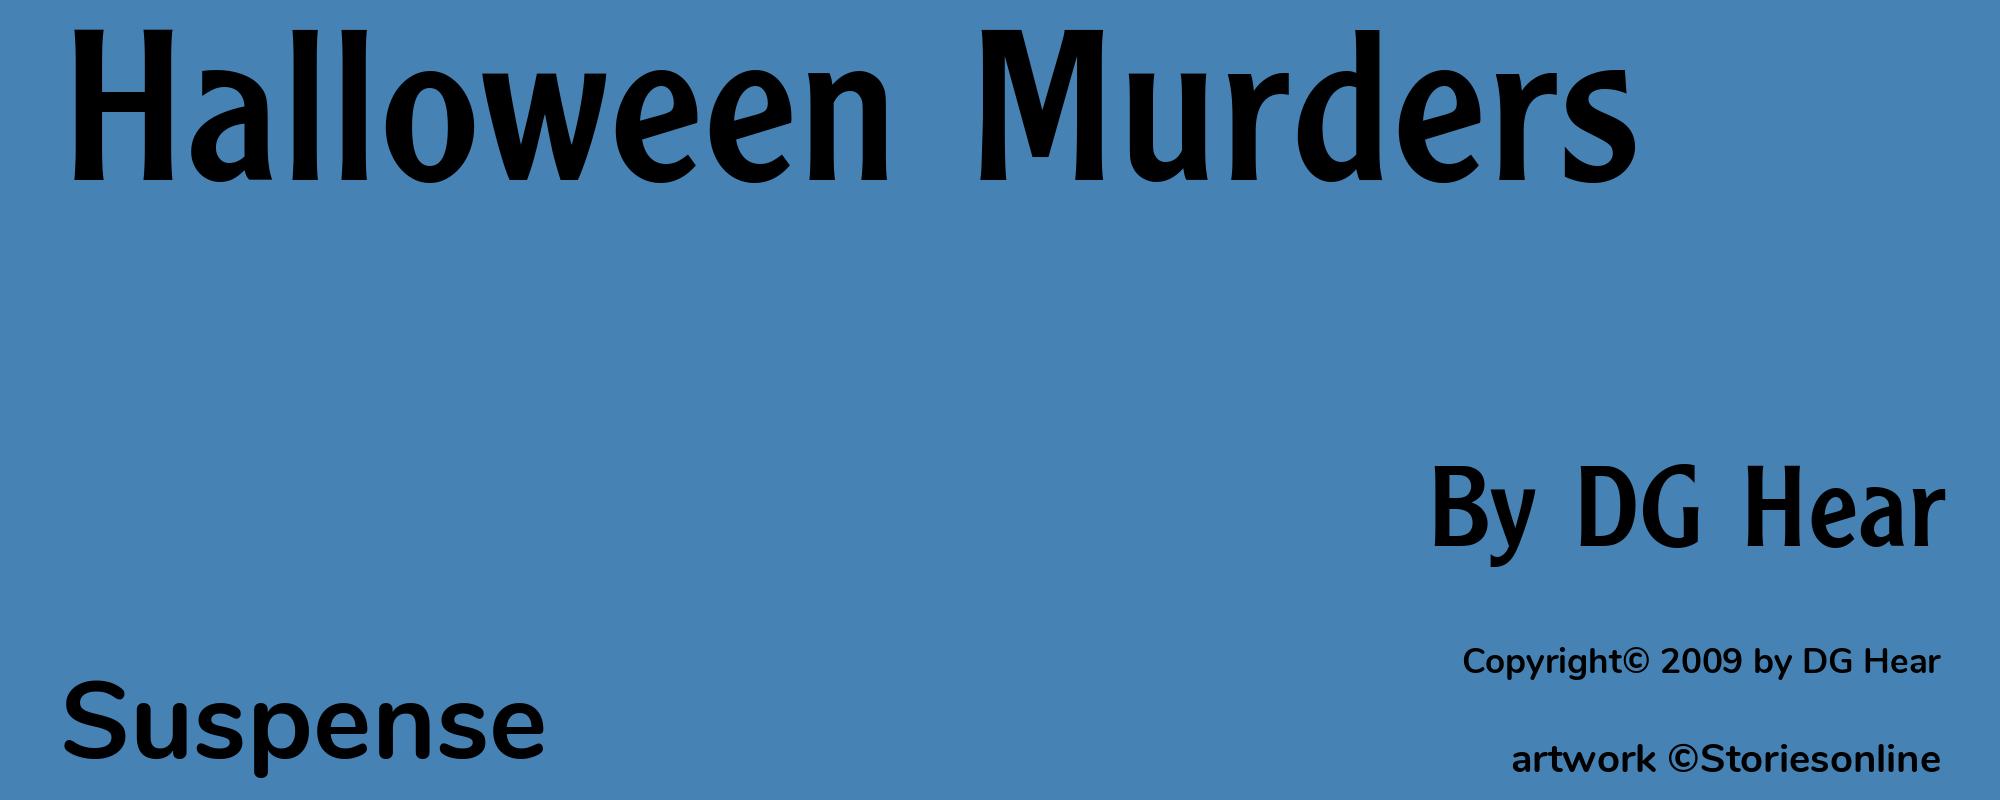 Halloween Murders - Cover